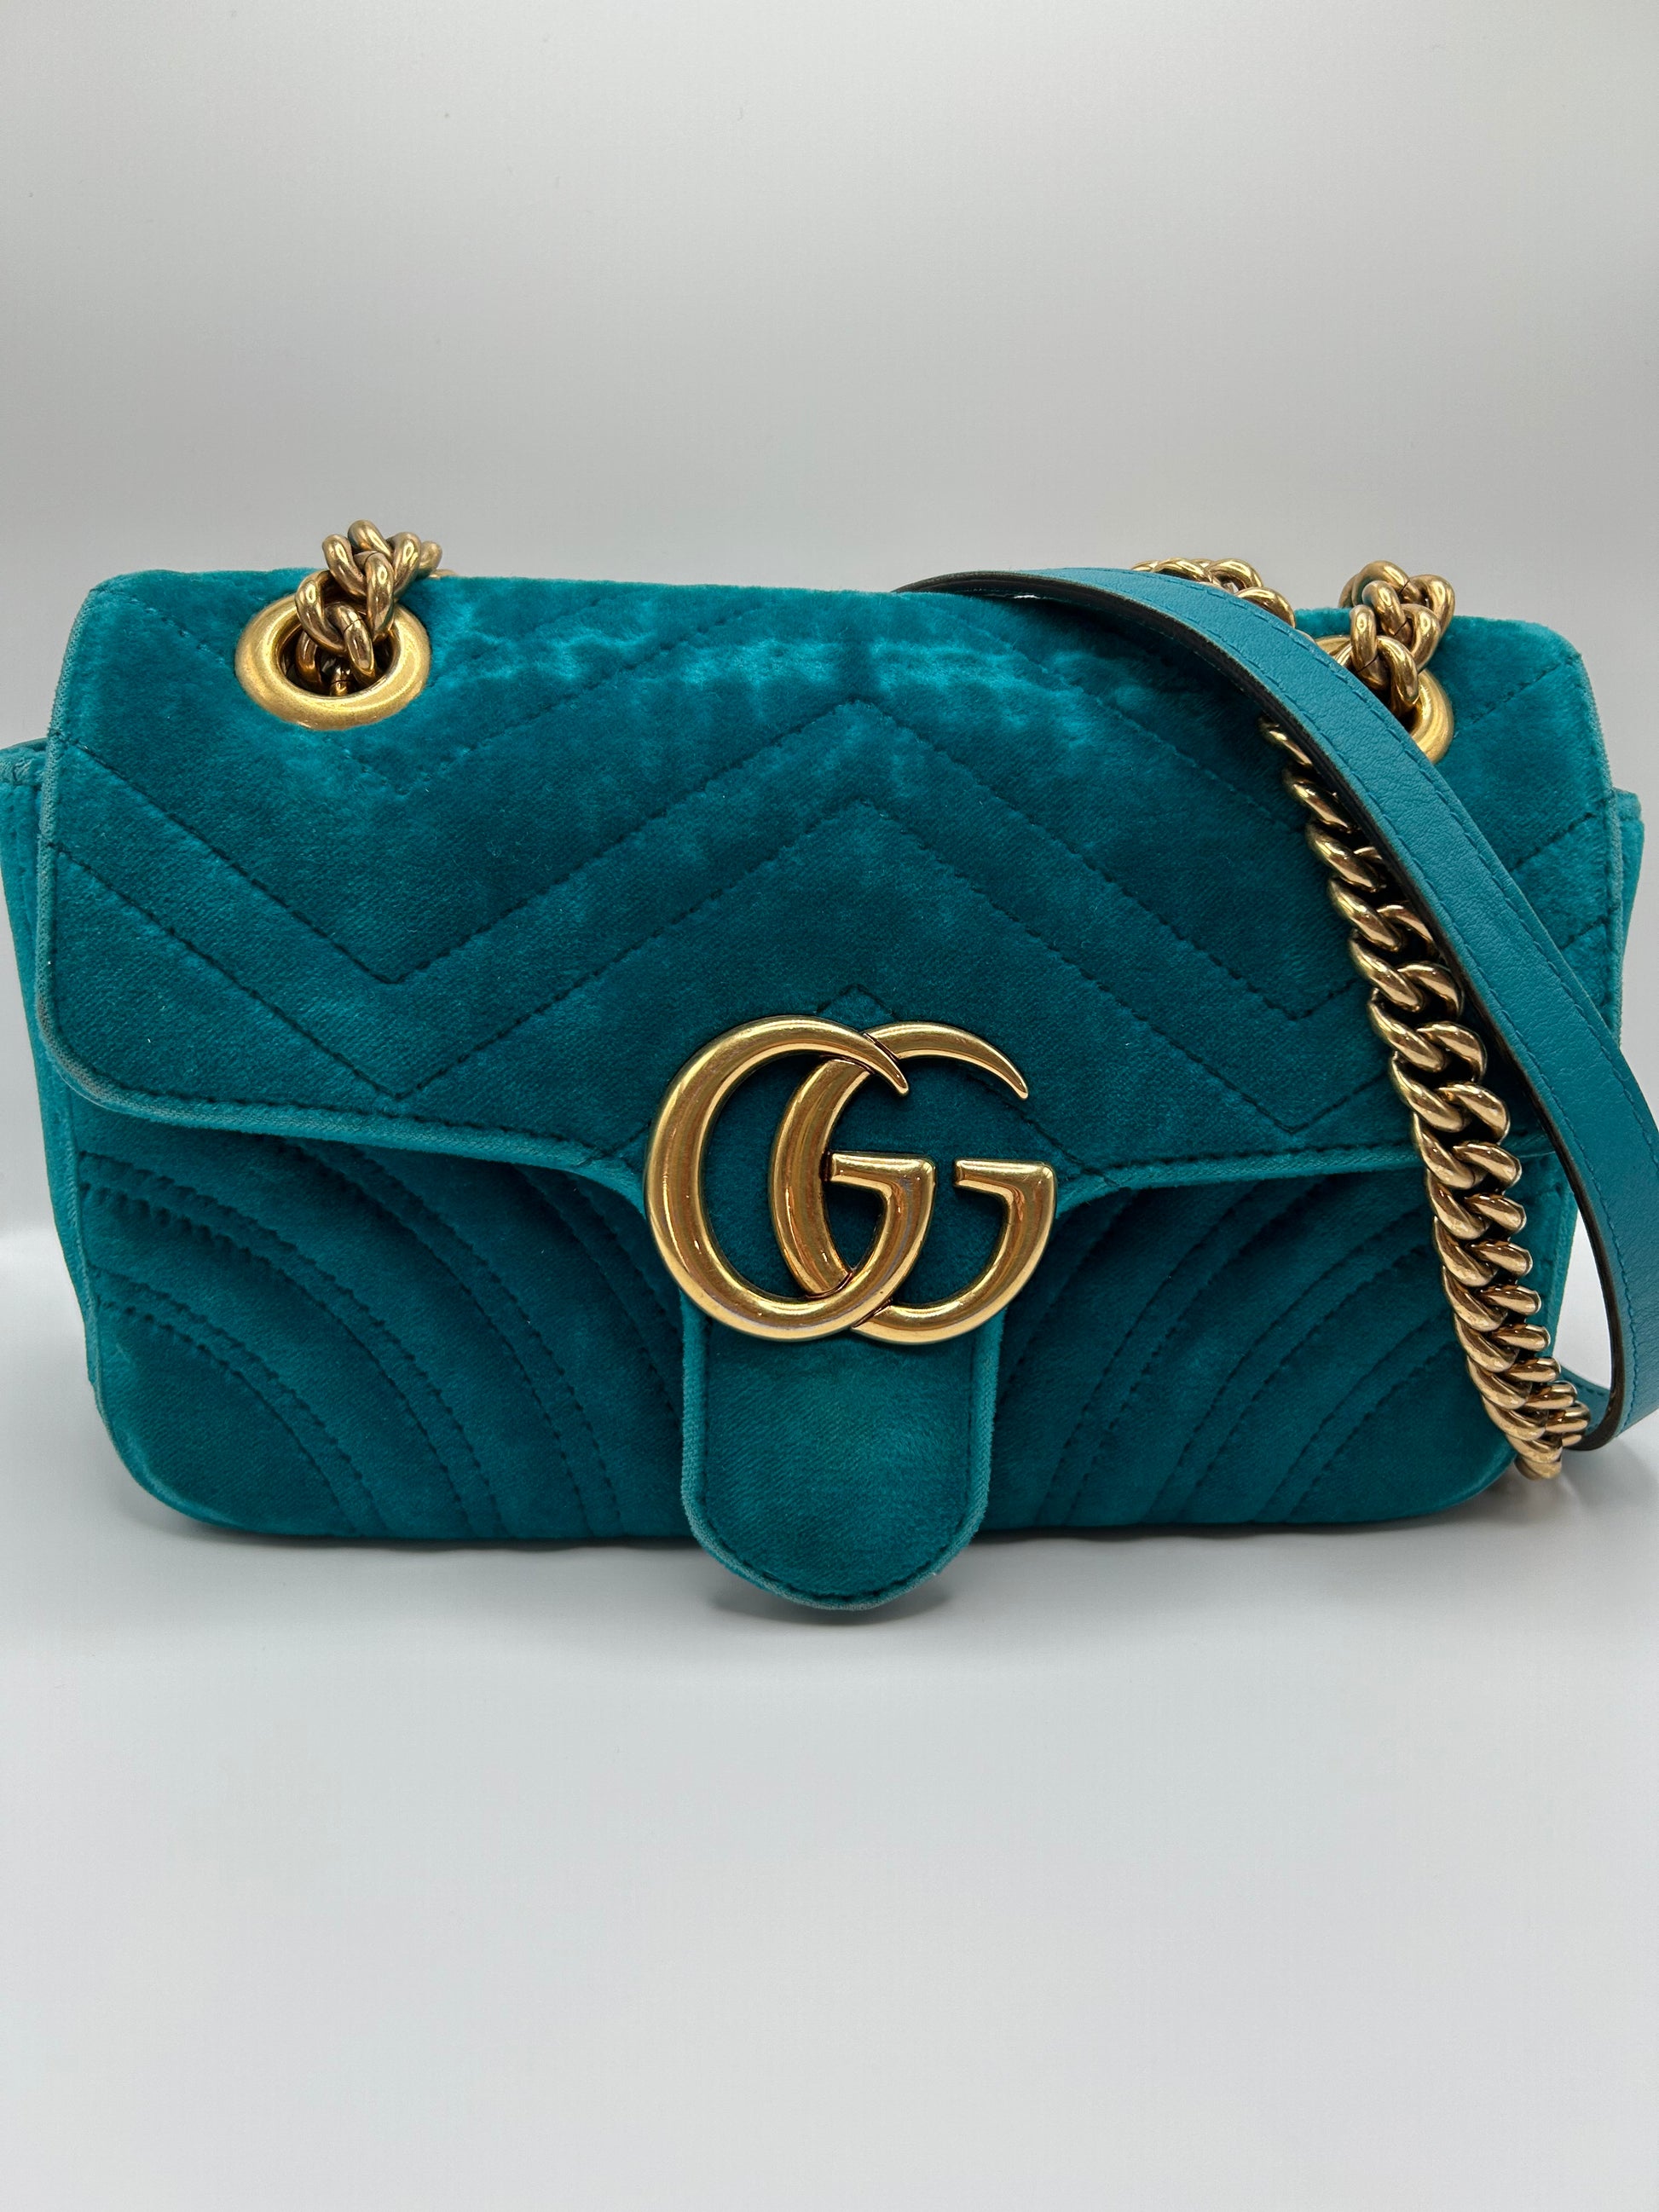 GG Marmont mini shoulder bag